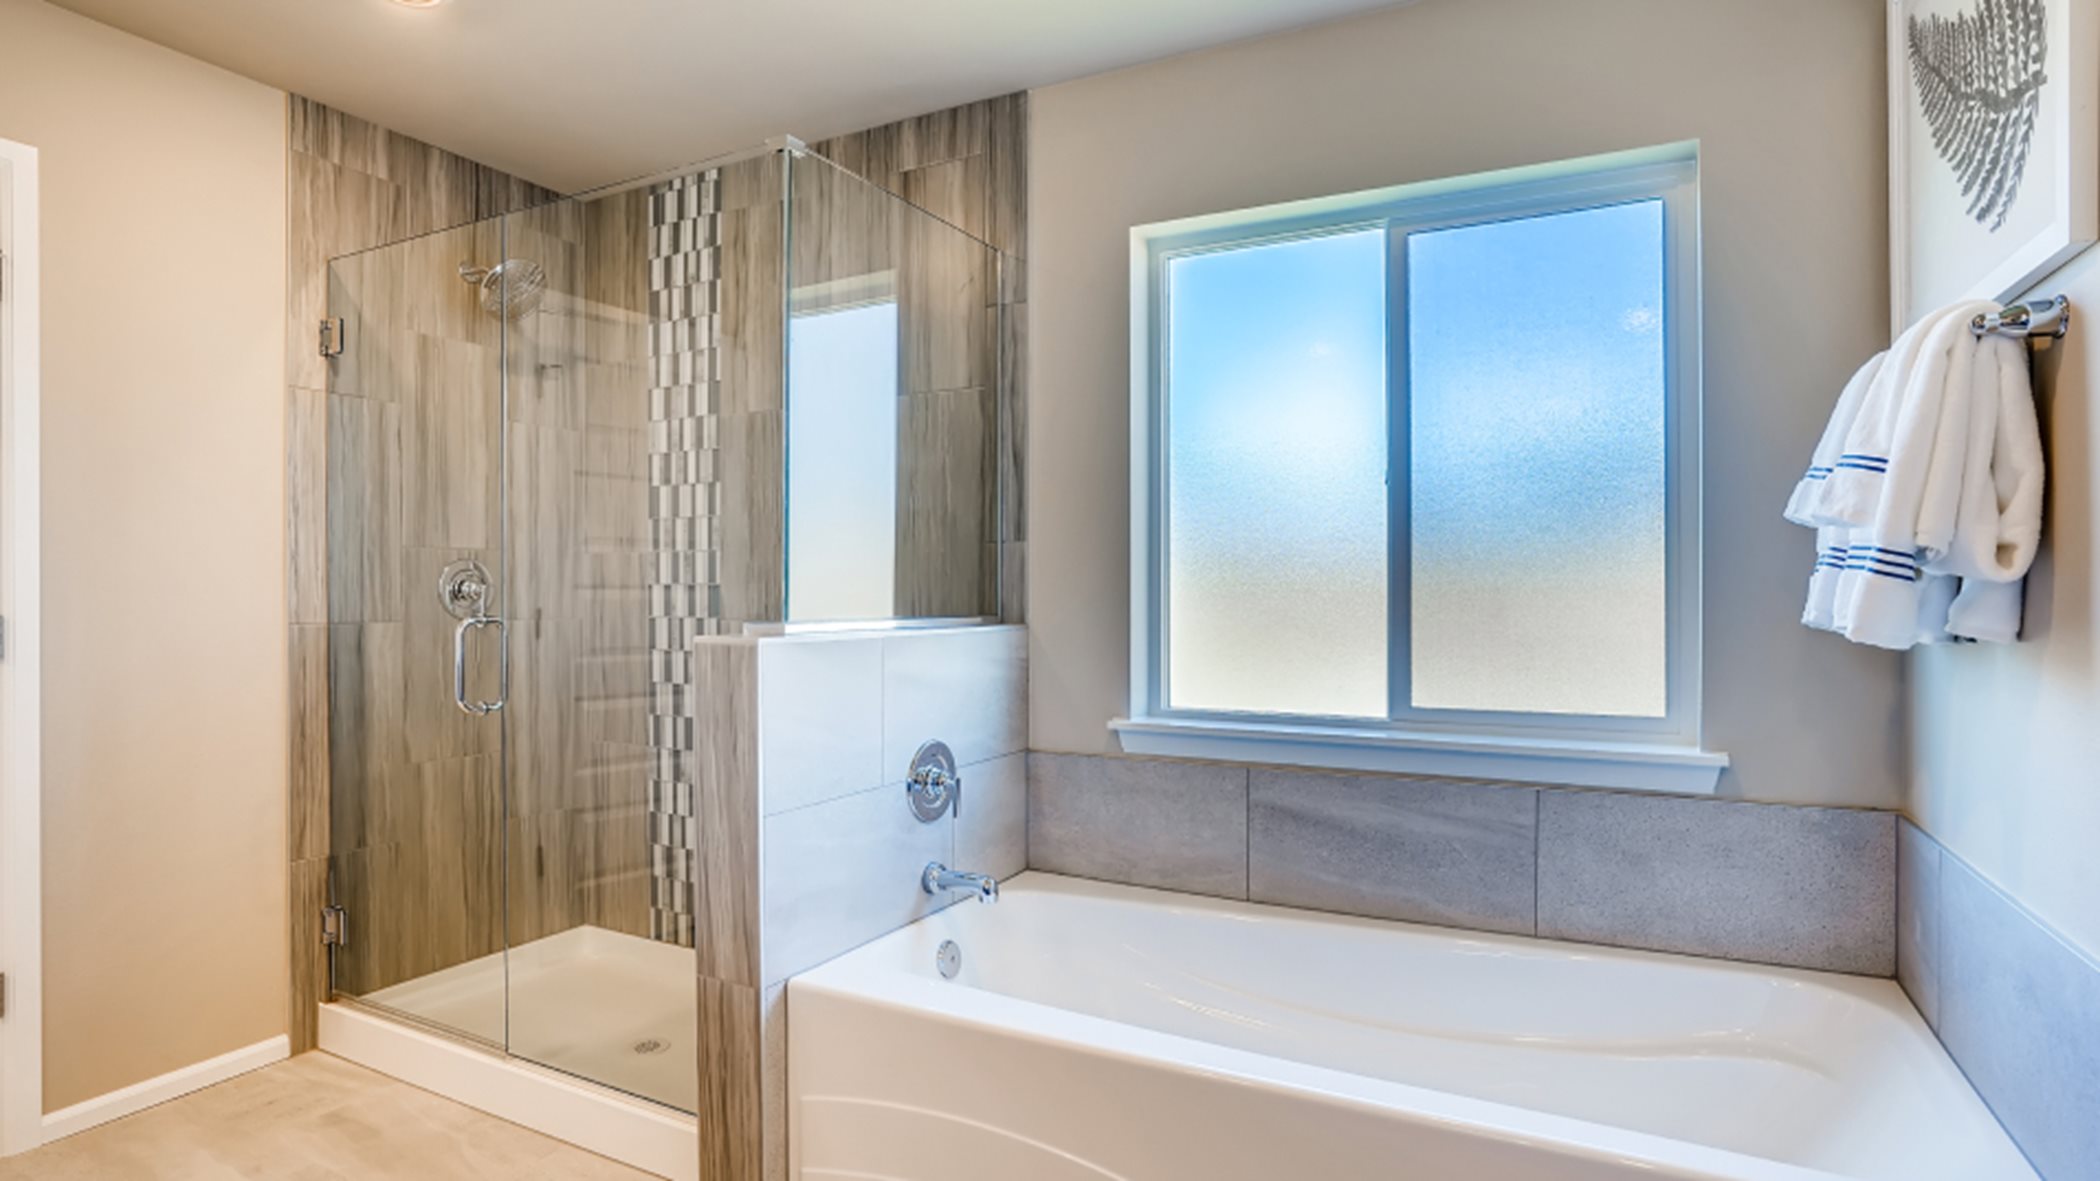 Separate tub and shower in the en-suite bathroom